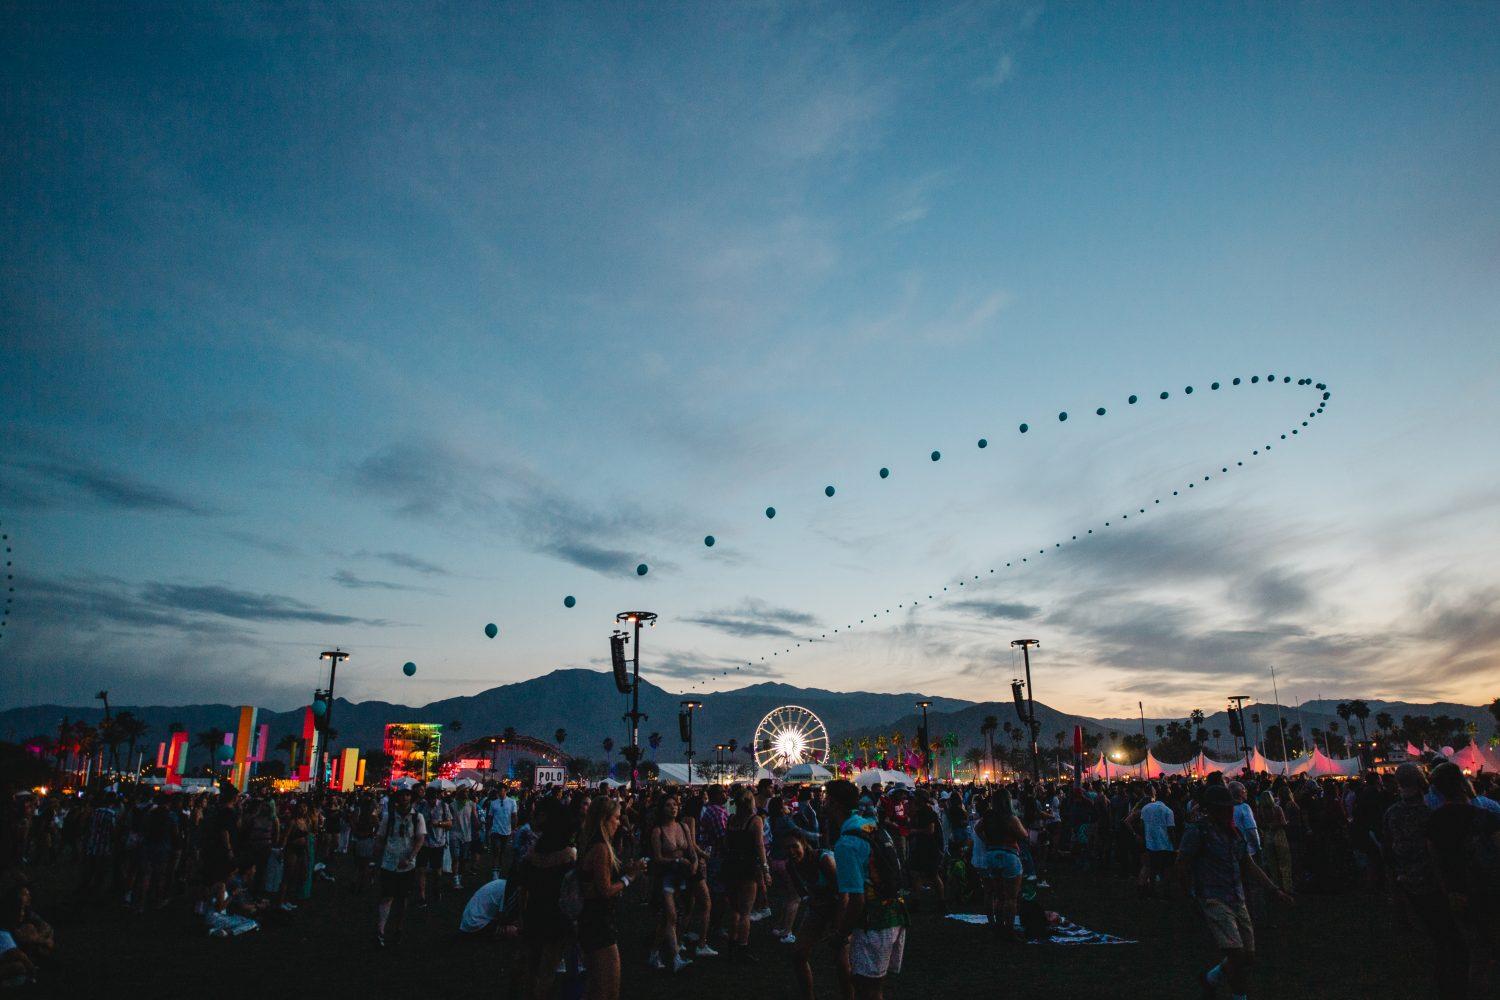 PHOTOS: Coachella Valley Music and Arts Festival 2019